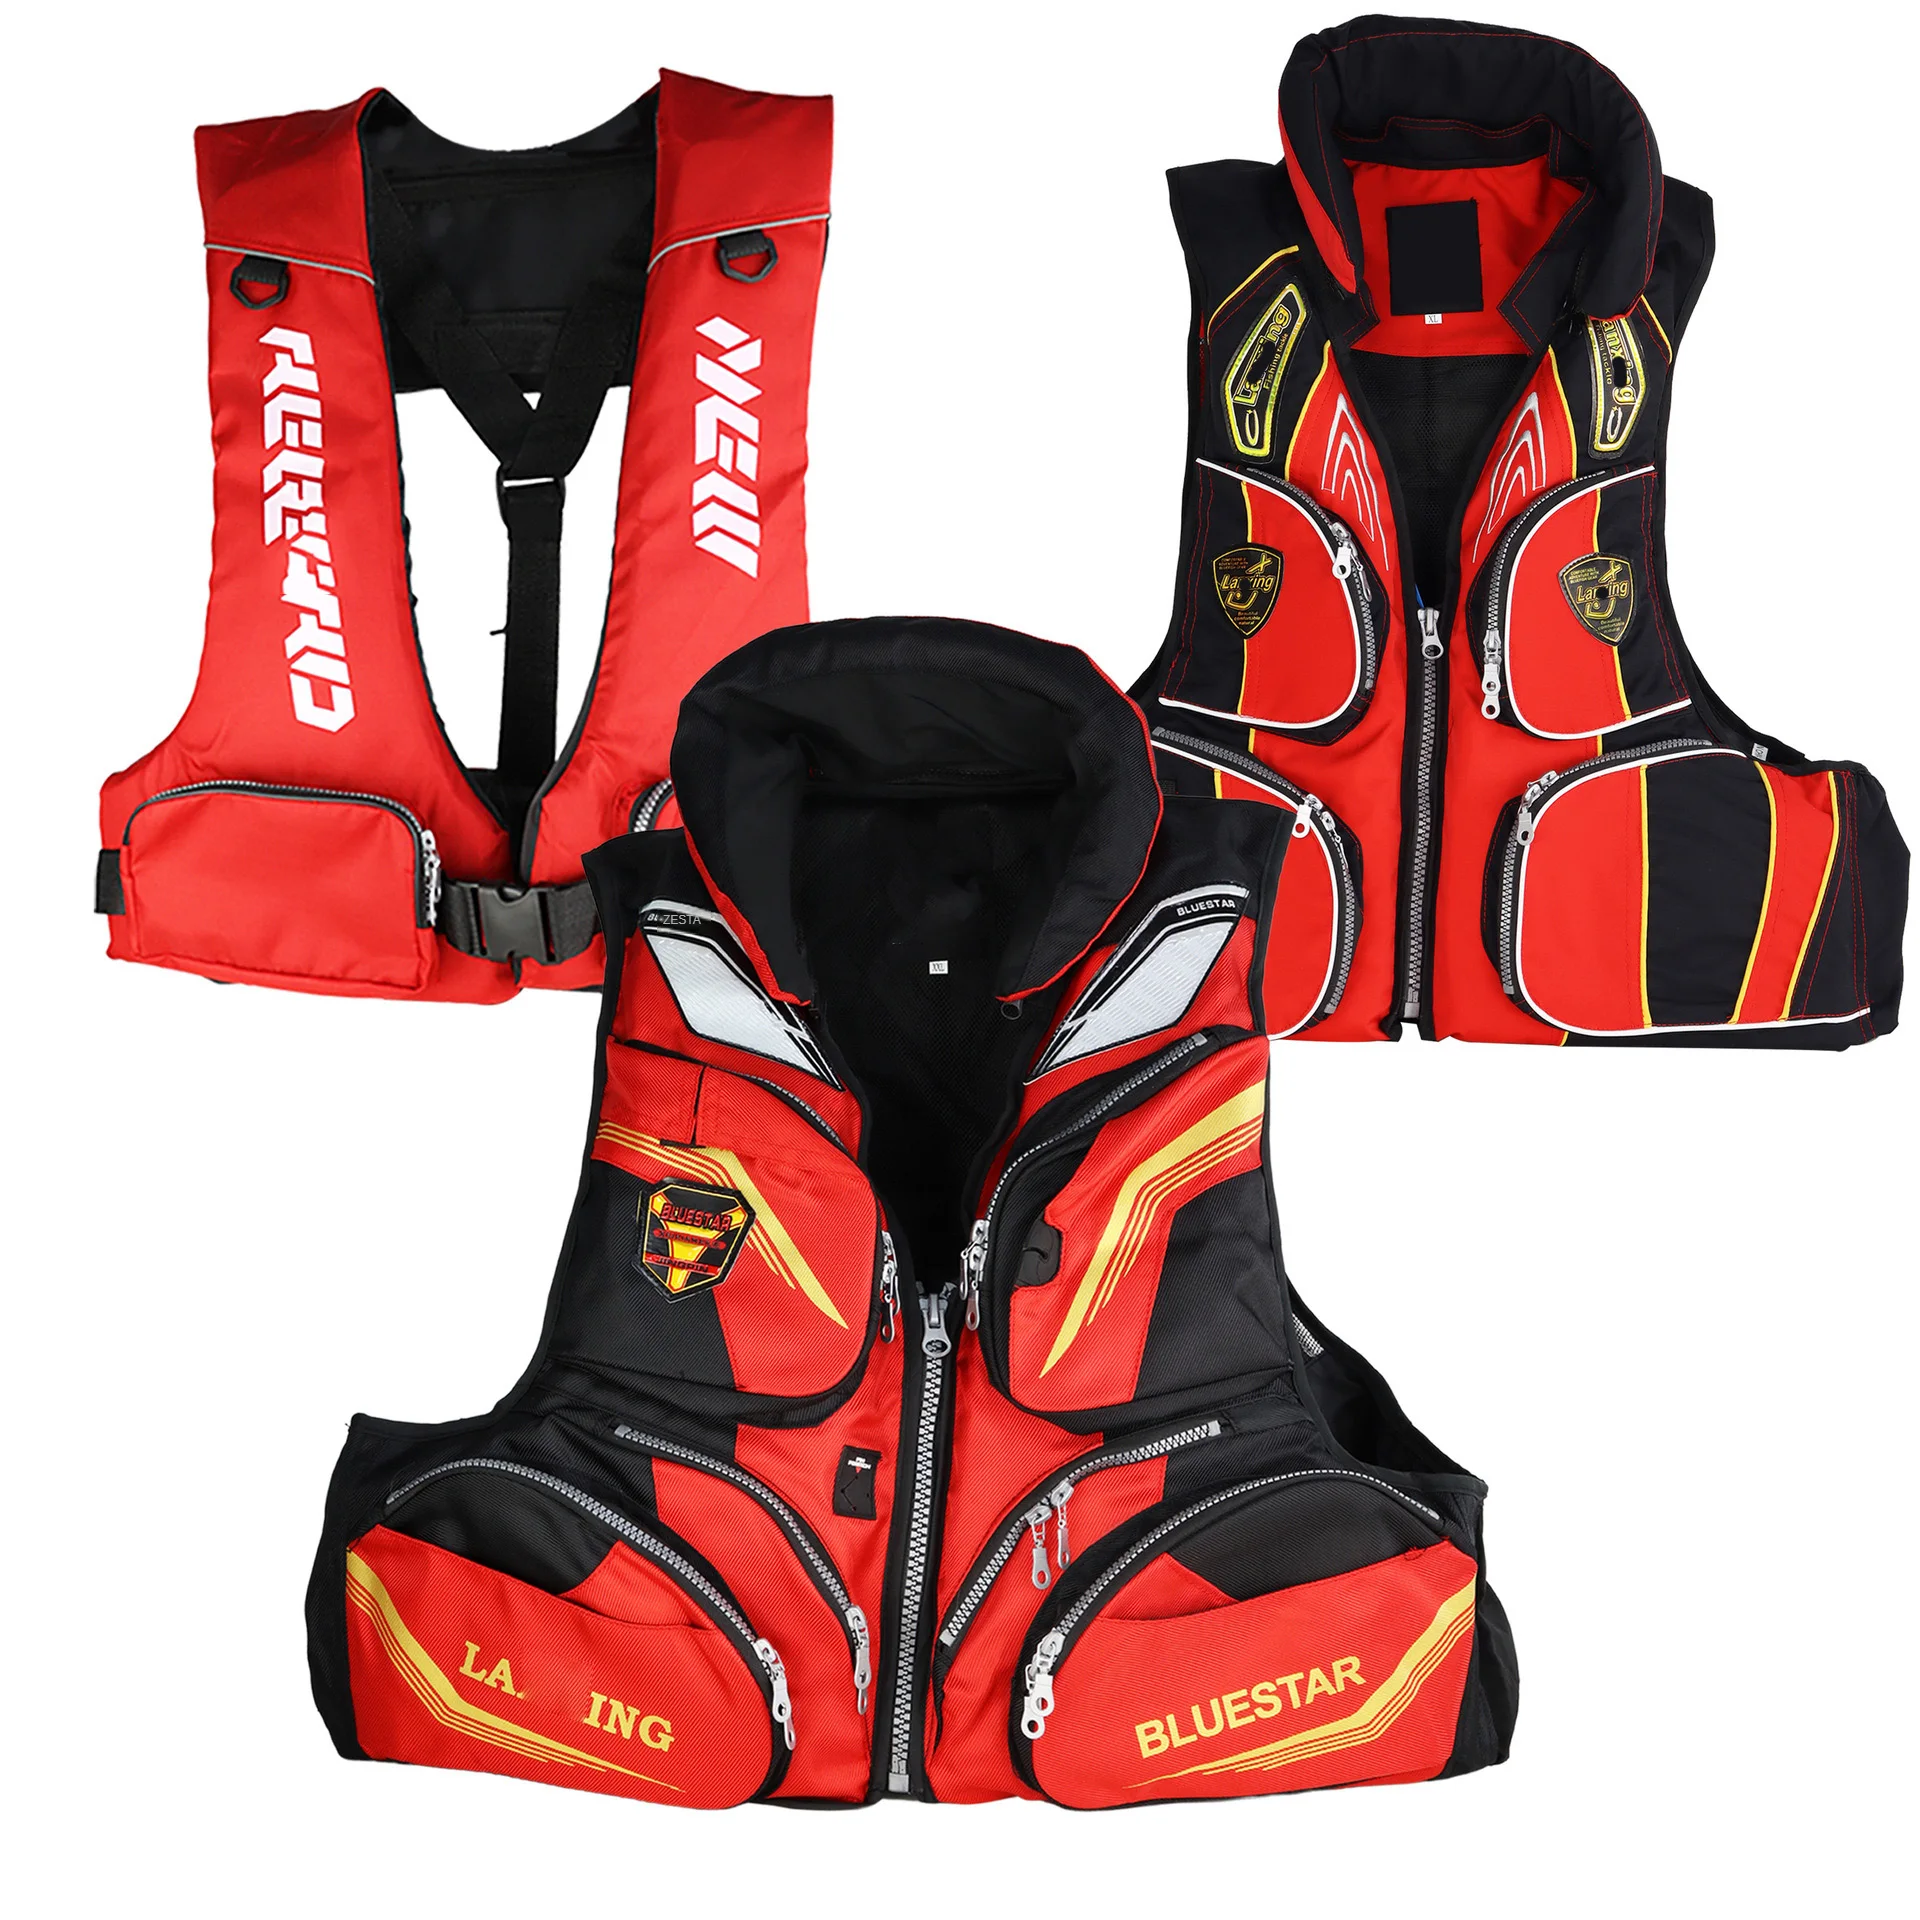 

Sbart Impact Vest Chalecos Salvavidas PFD Lifejacket Water Sport Fishing Life Jacket for Adults